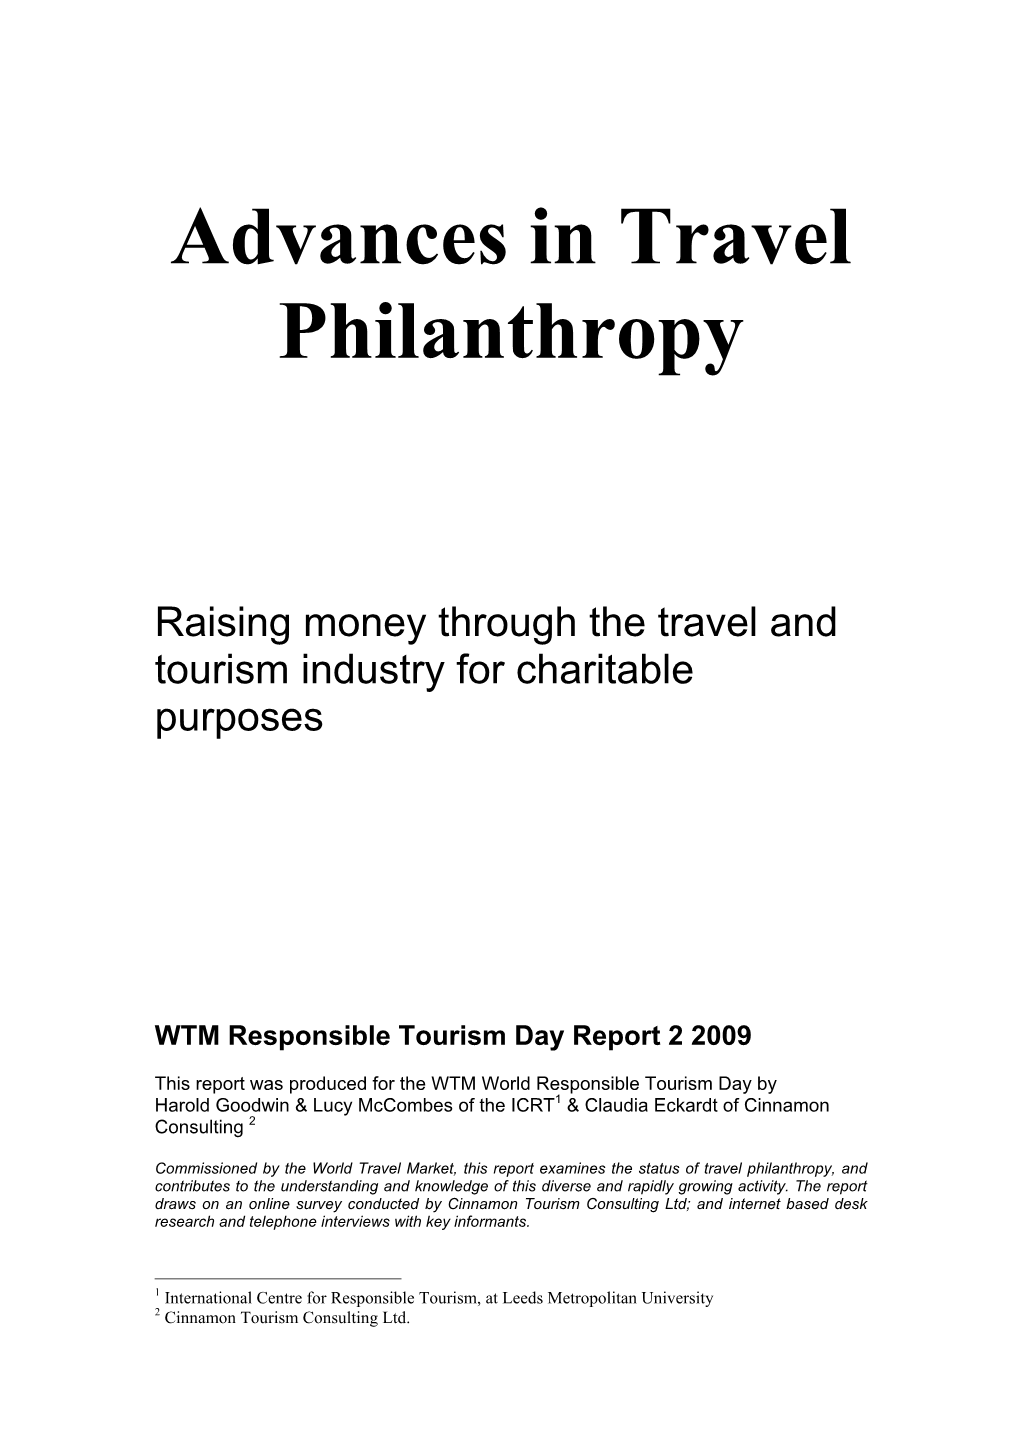 Advances in Travel Philanthropy